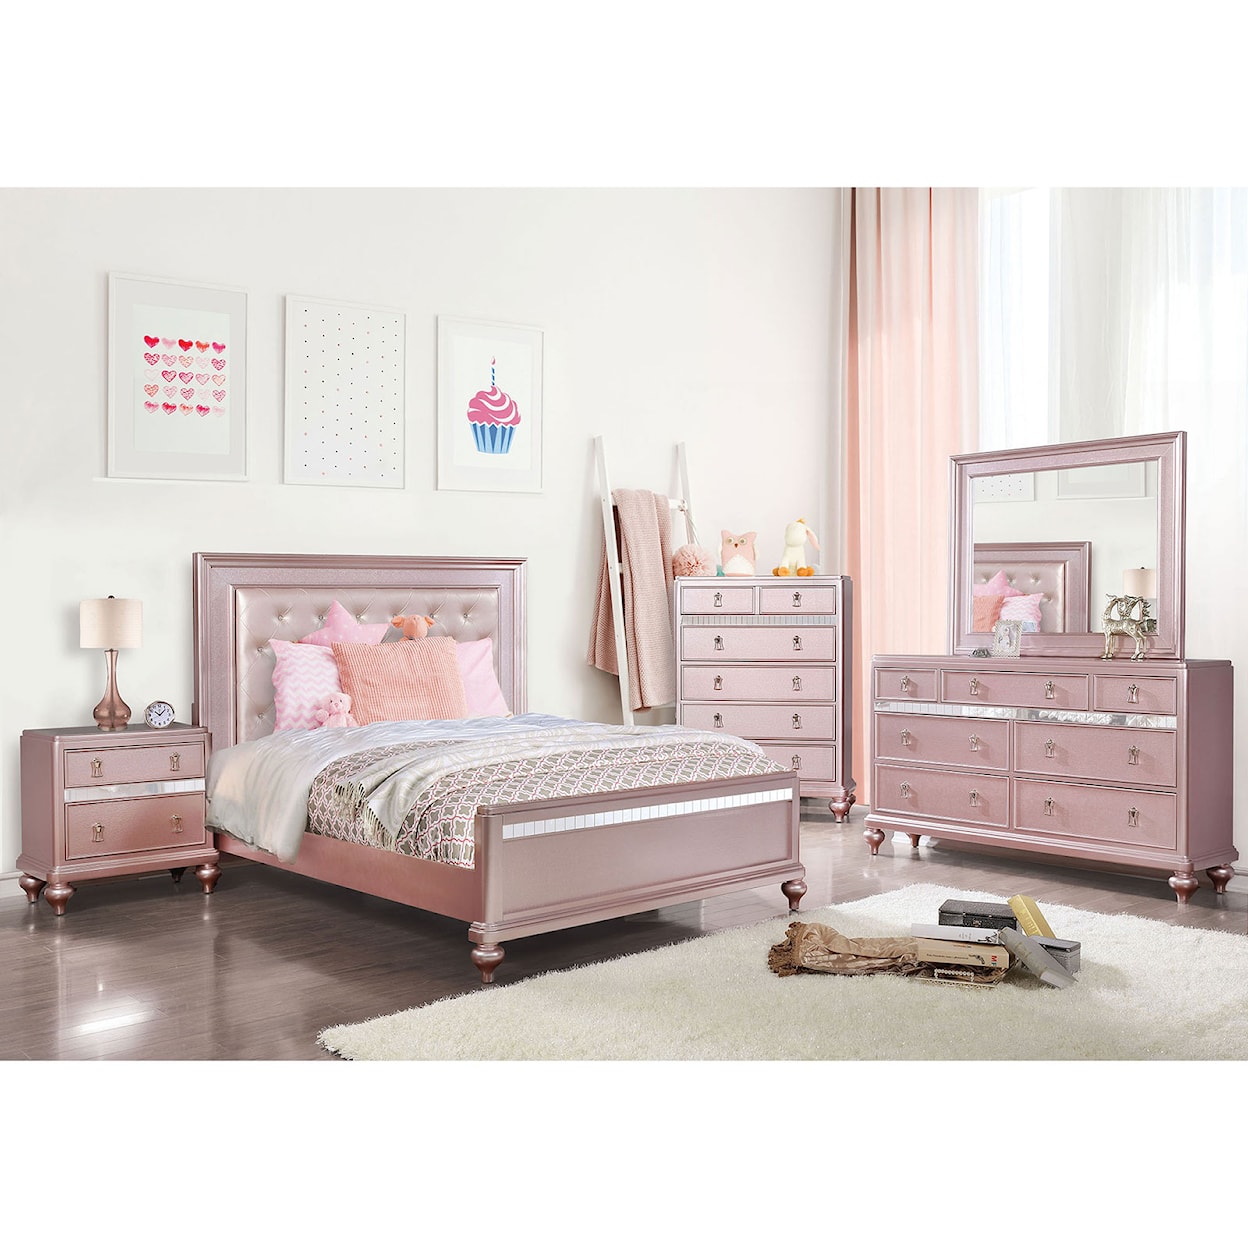 Furniture of America Ariston Full Bedroom Set